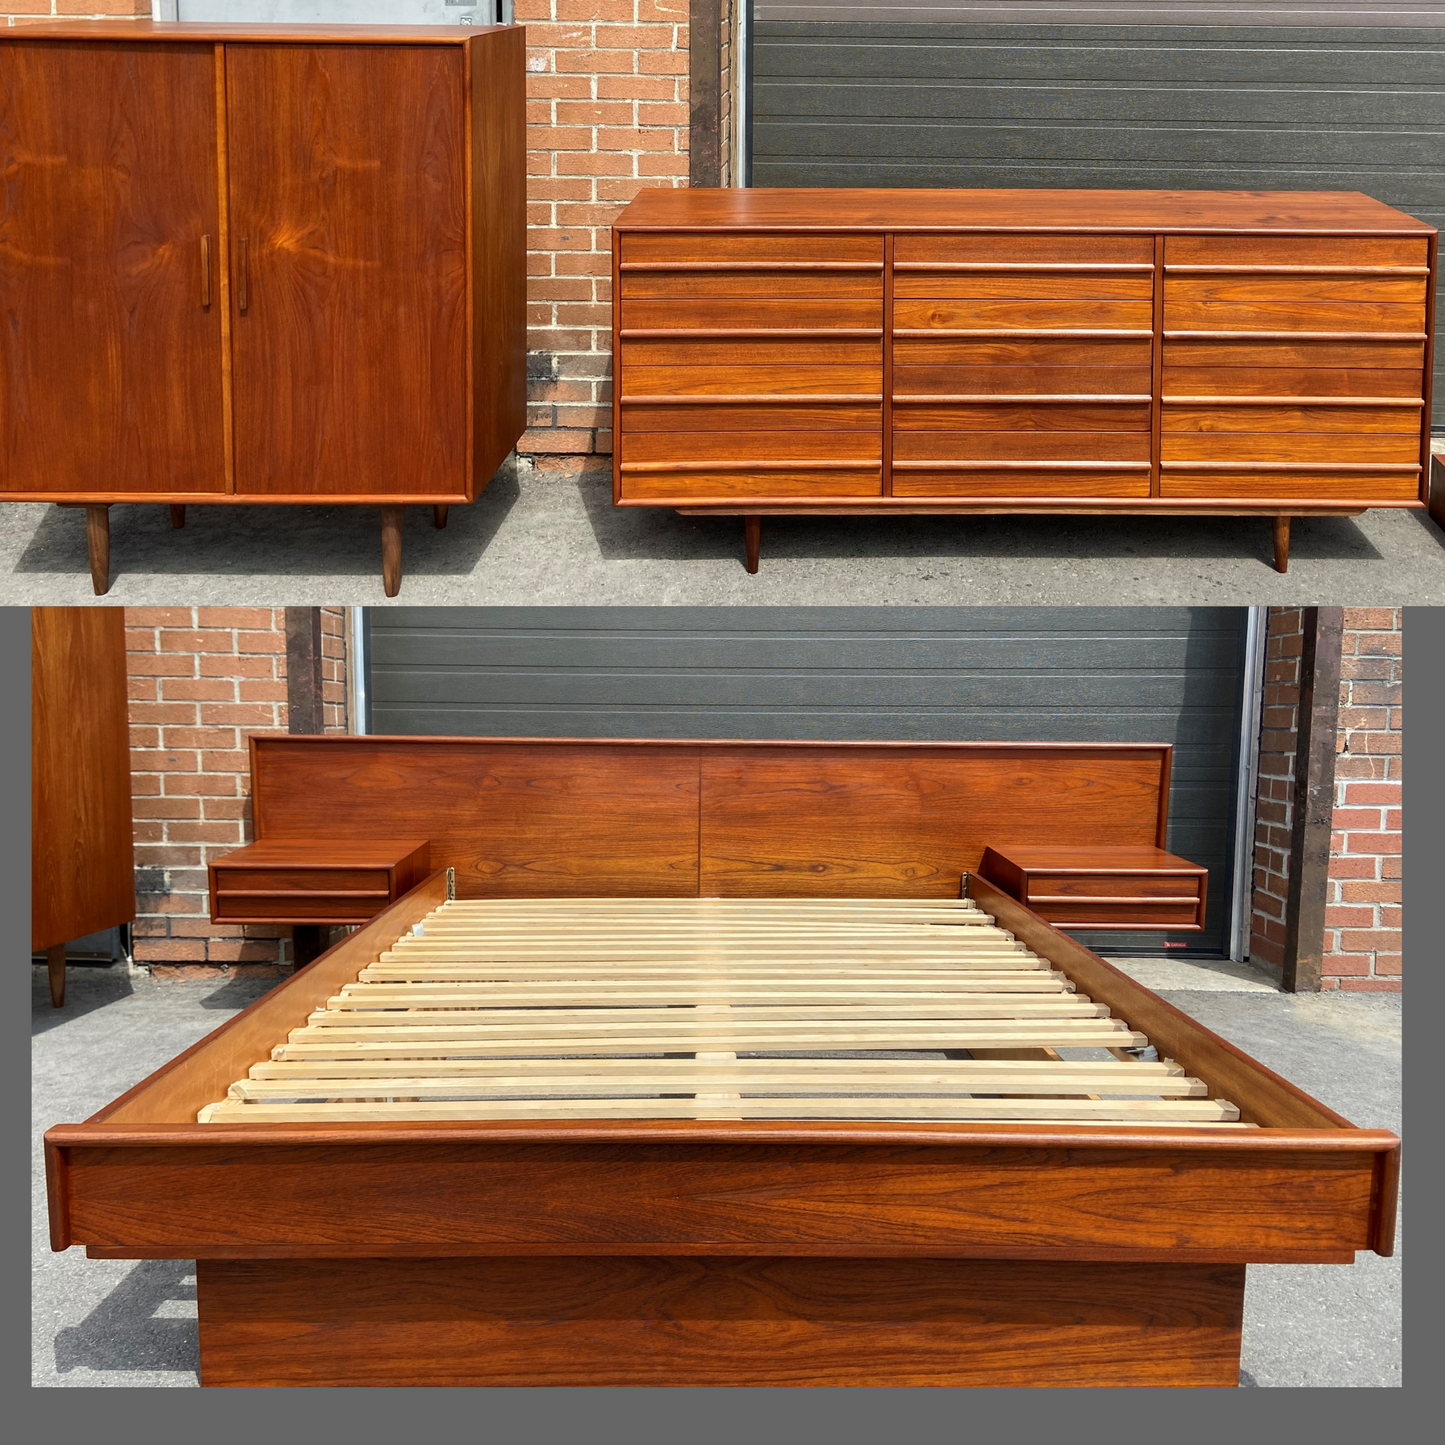 REFINISHED MCM Teak dresser, wardrobe & Queen platform bed w floating nightstands, Perfect